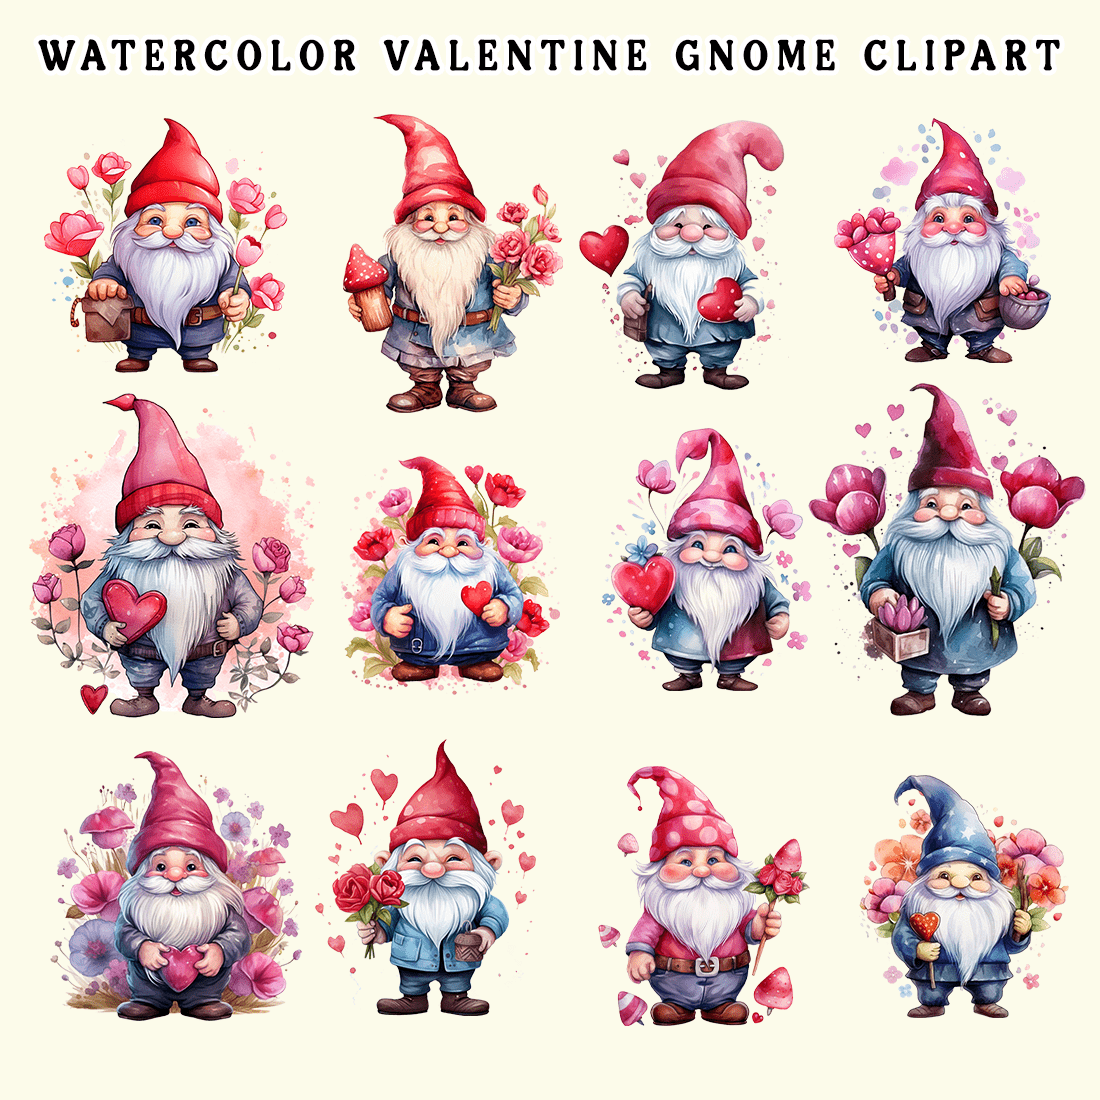 Watercolor Valentine Gnome Clipart preview image.